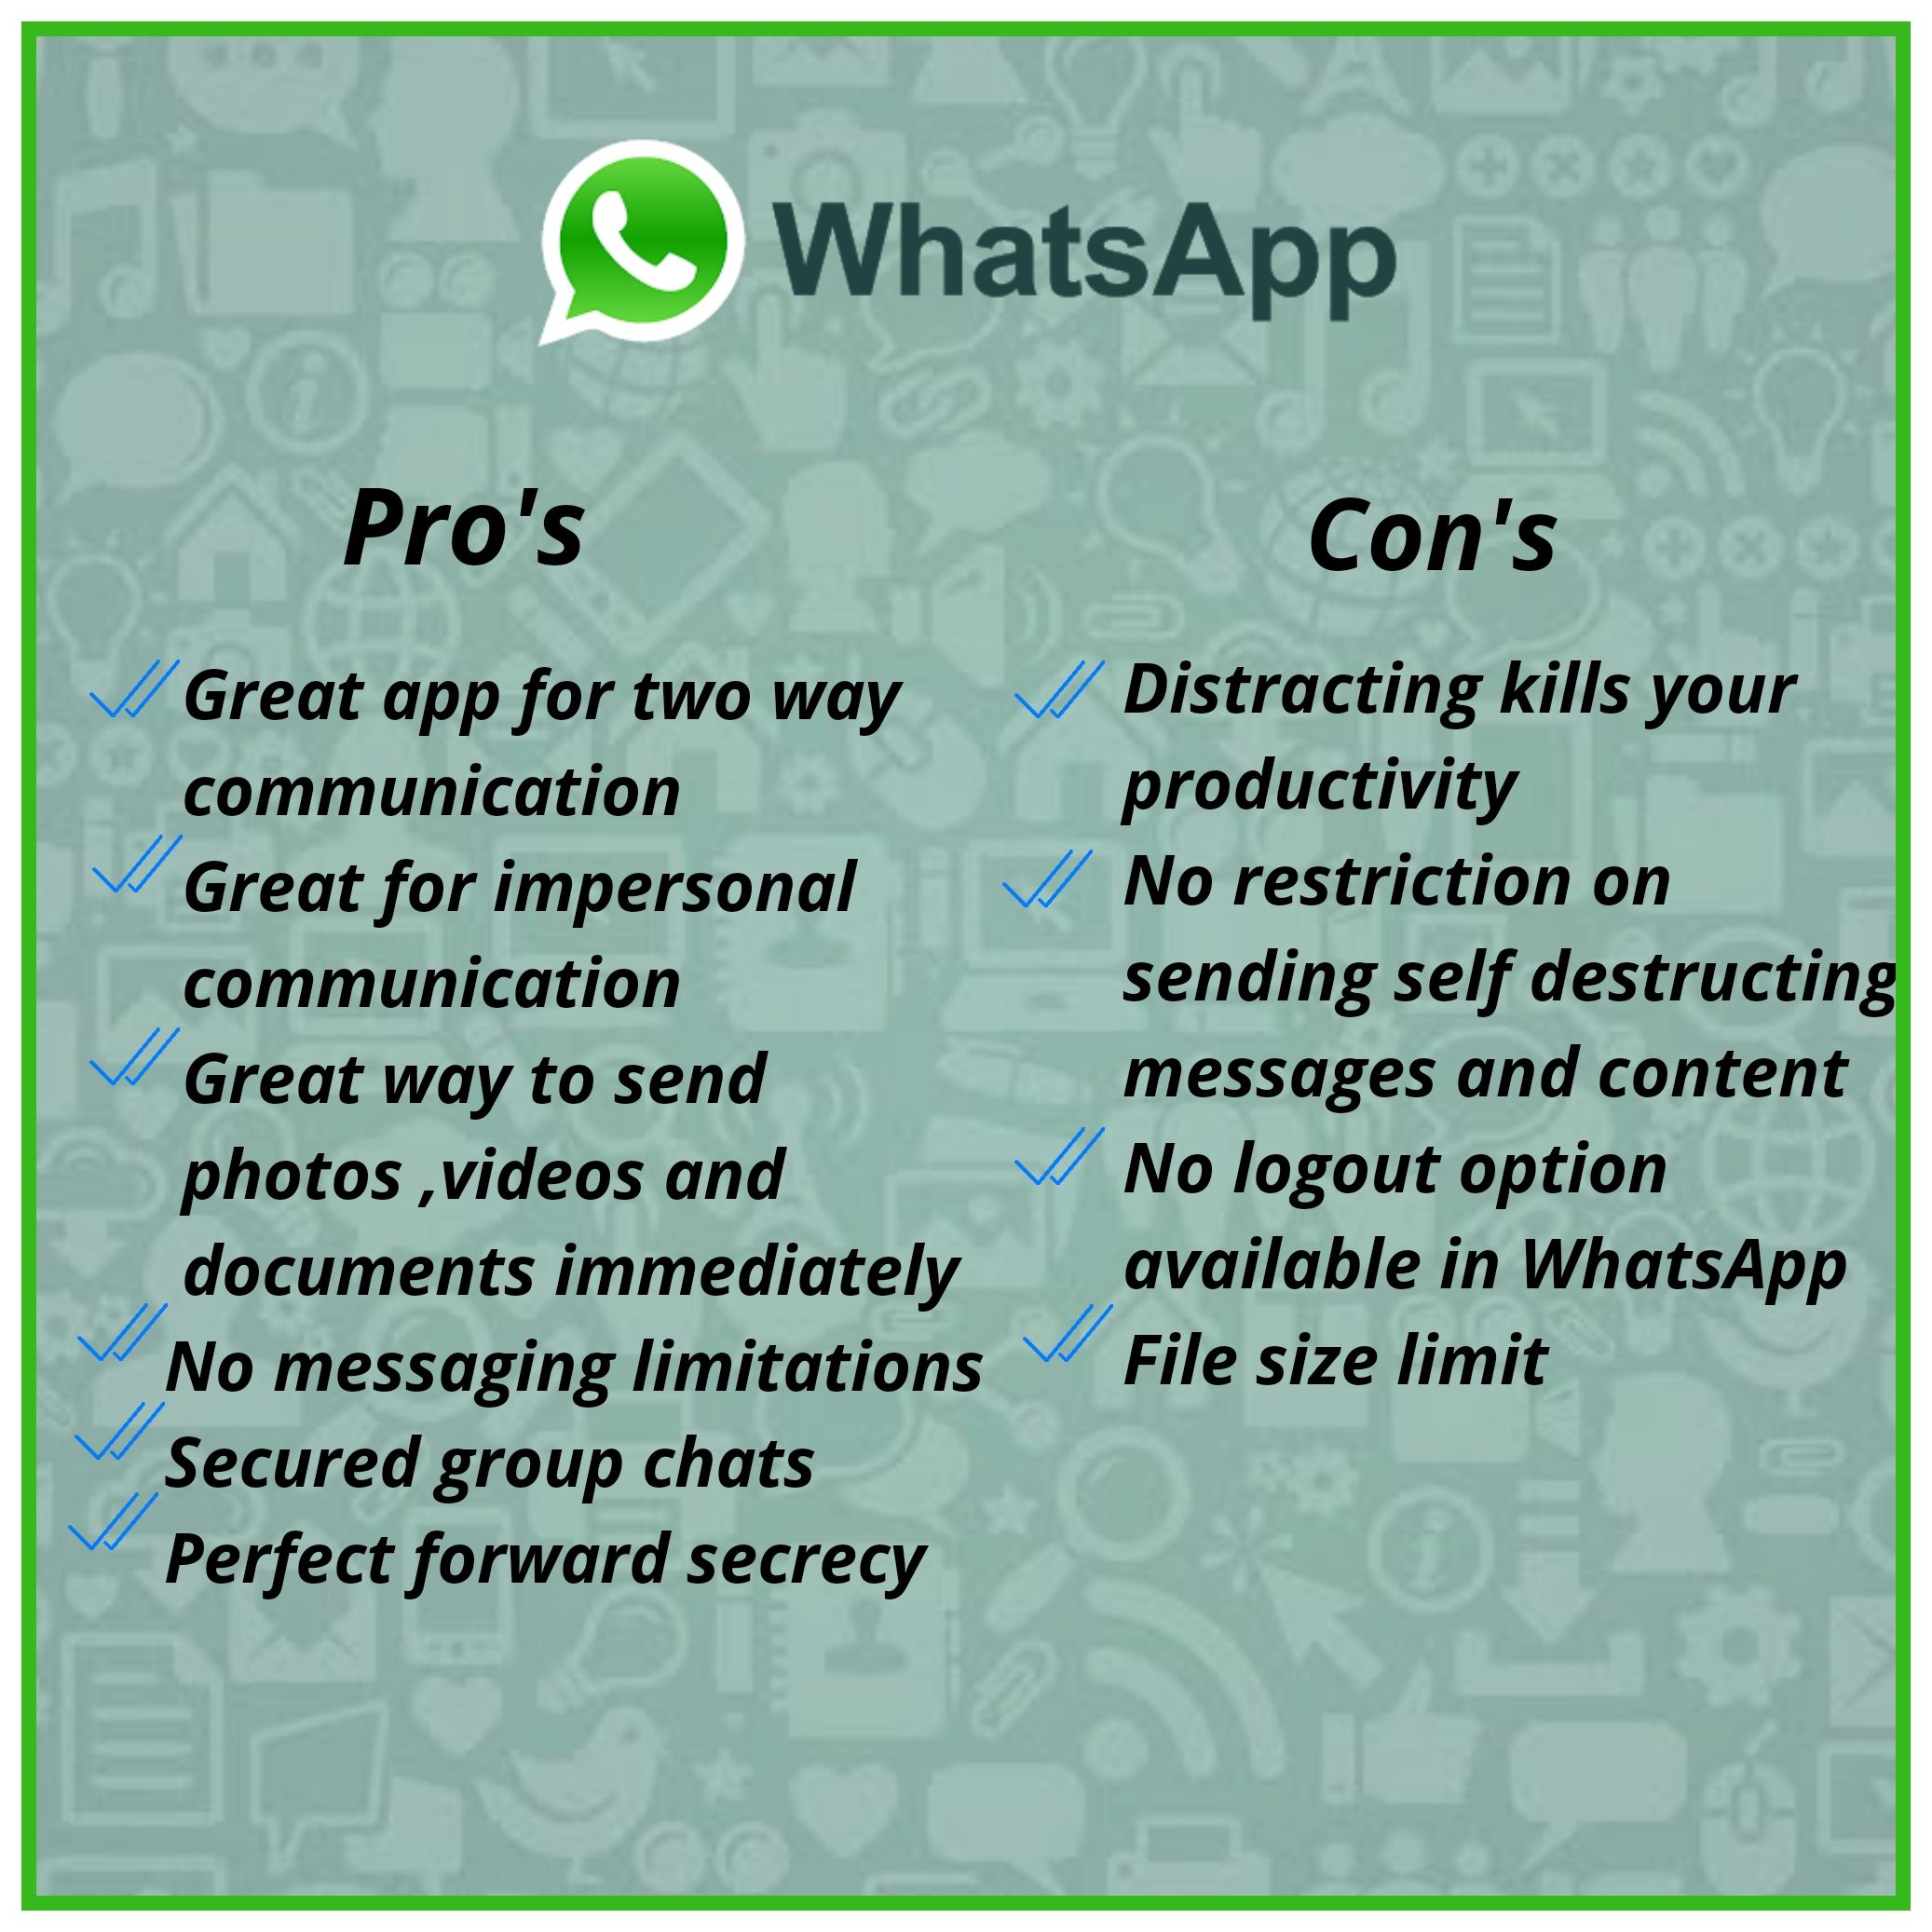 whatsapp-pros-and-cons.jpg